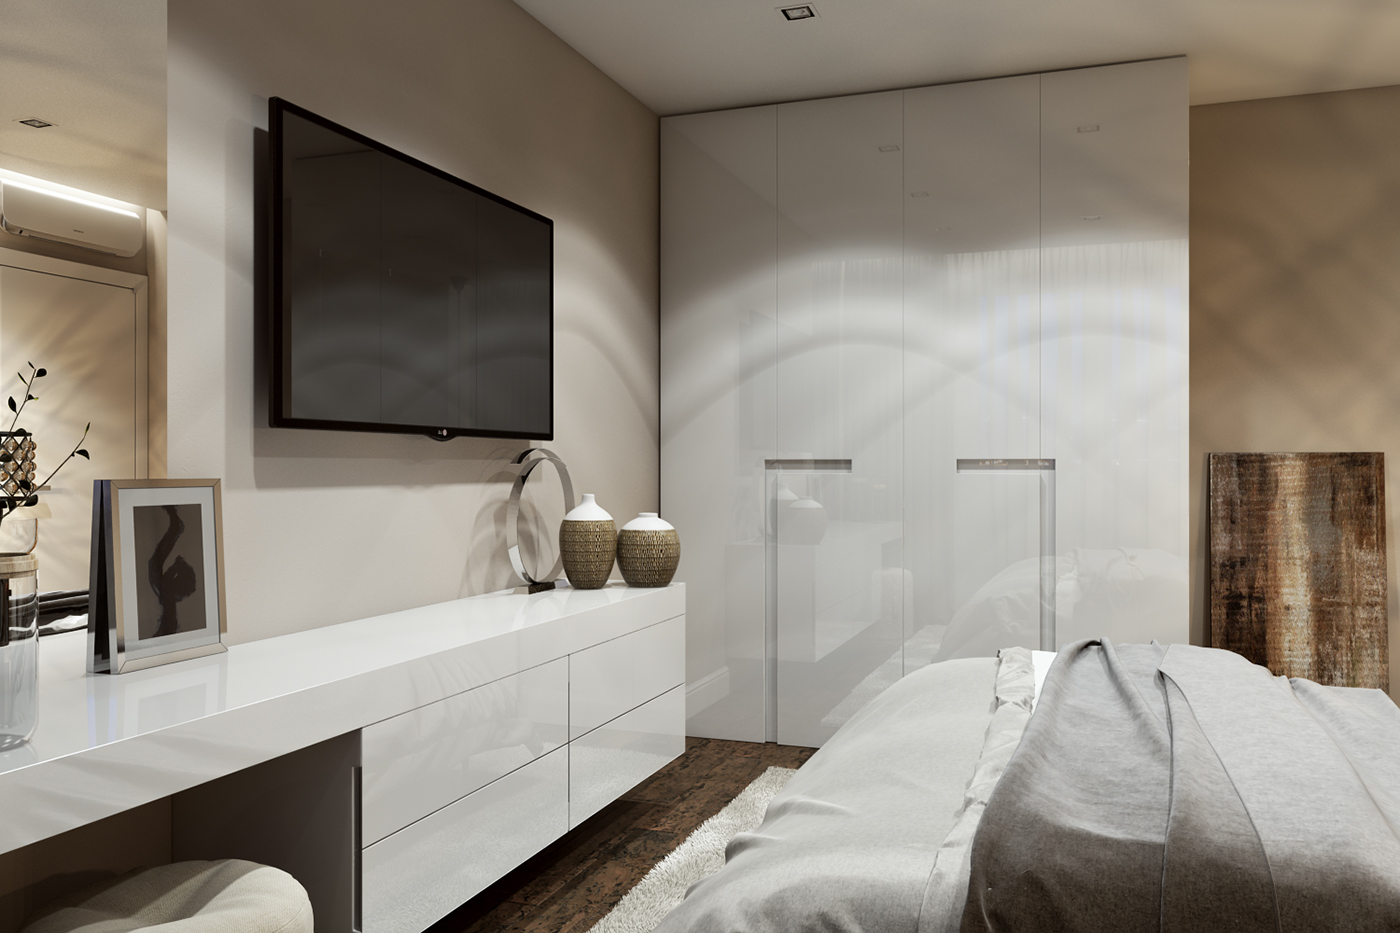 bedroom contemporary Interior night inspiration